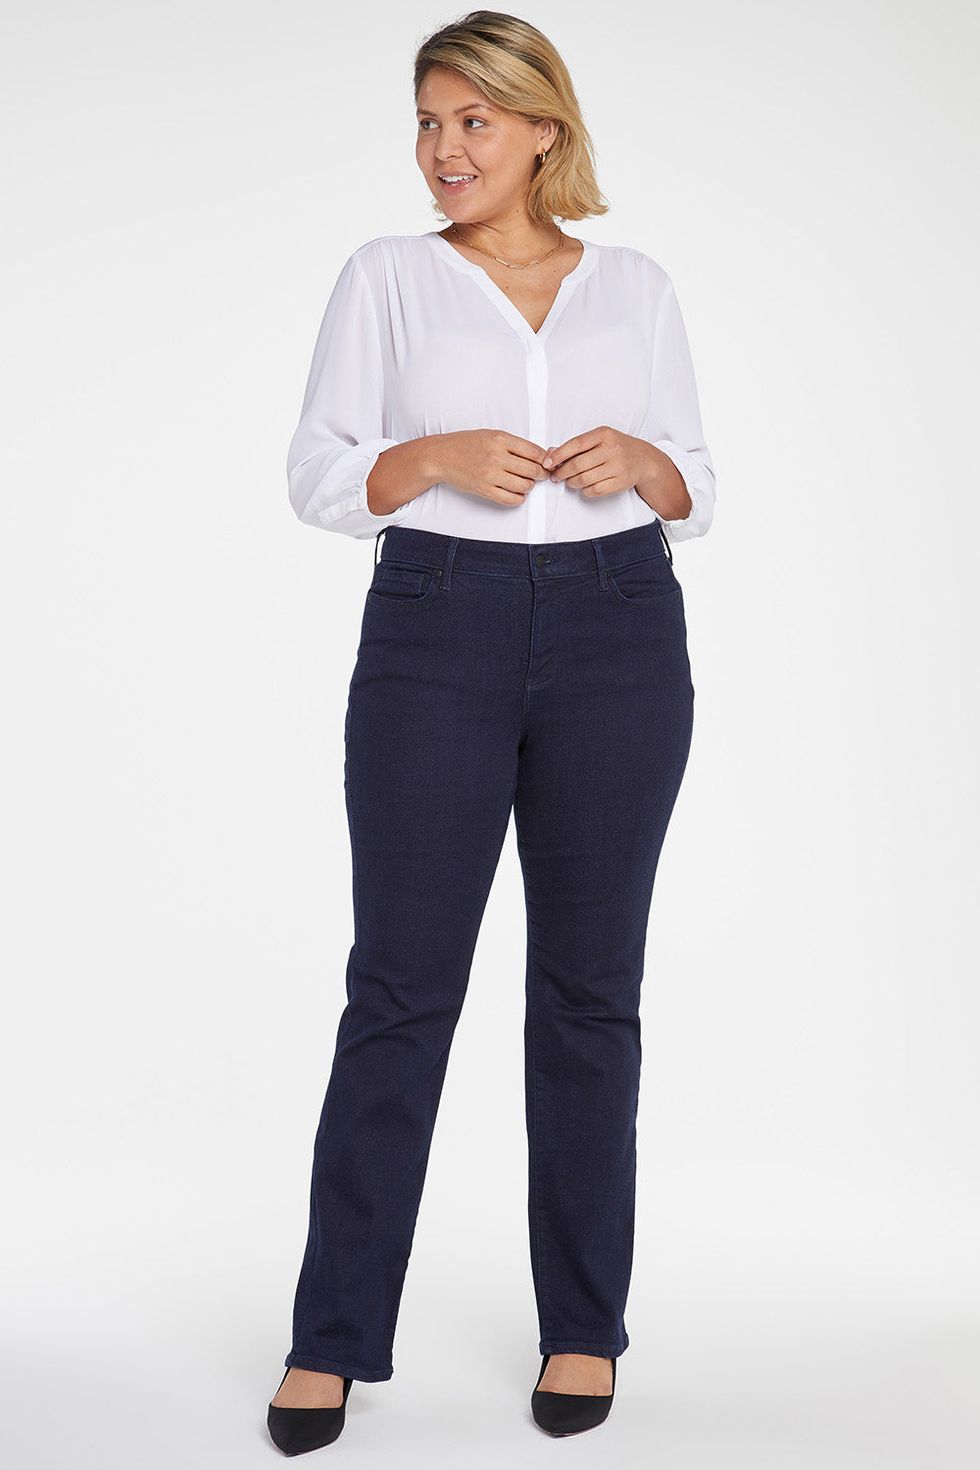 NYDJ Marilyn Straight Jeans in Plus Size